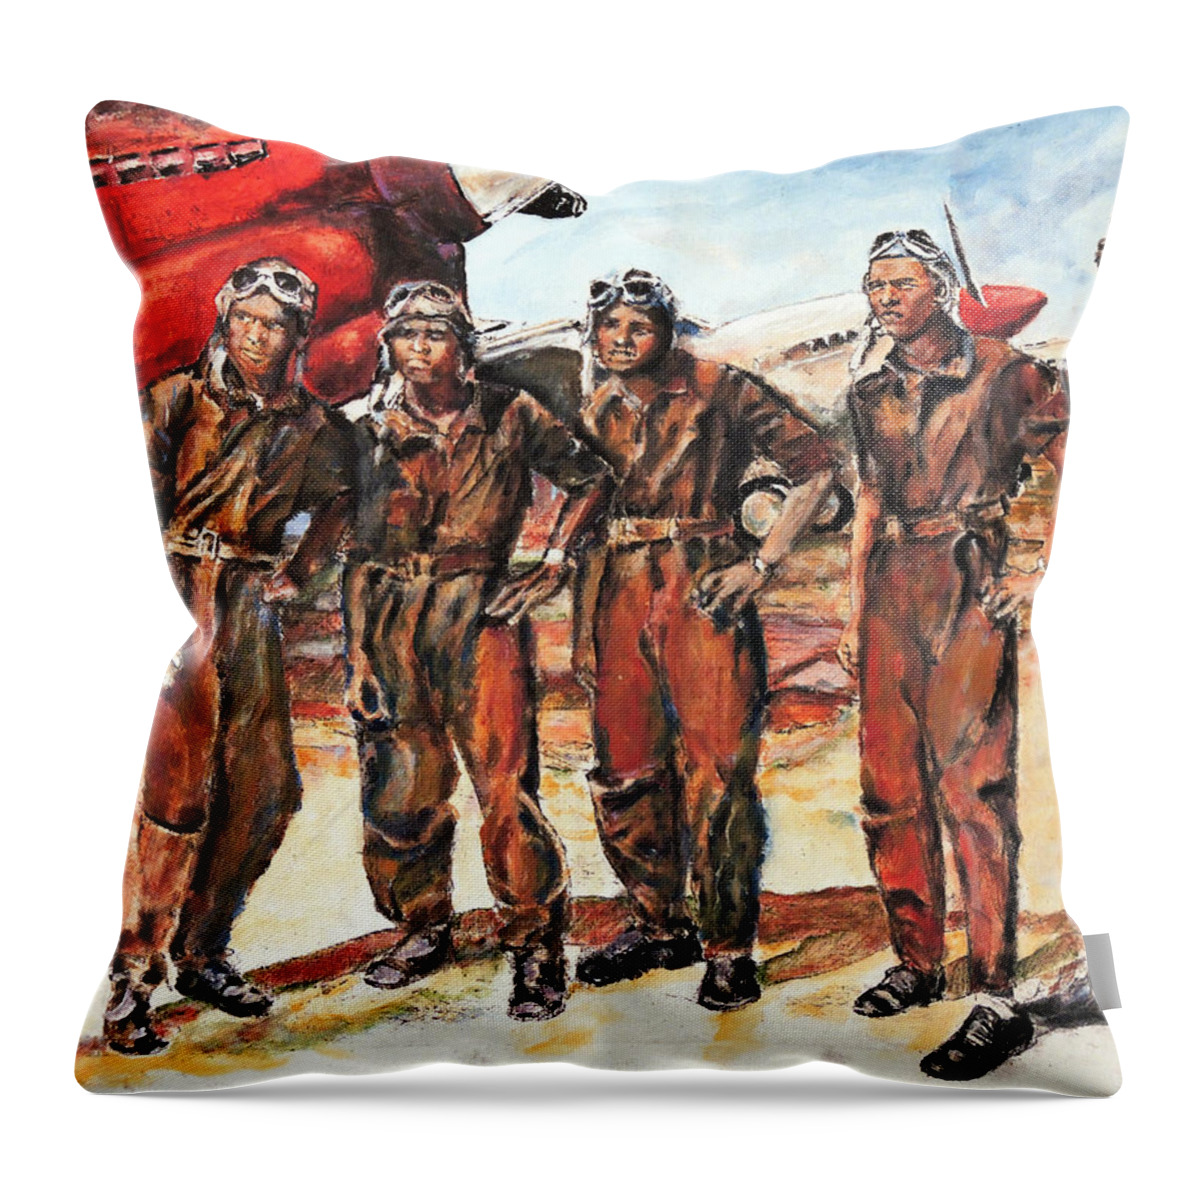 Tuskegee Airmen Throw Pillow featuring the painting Tuskegee Airmen by John Bohn